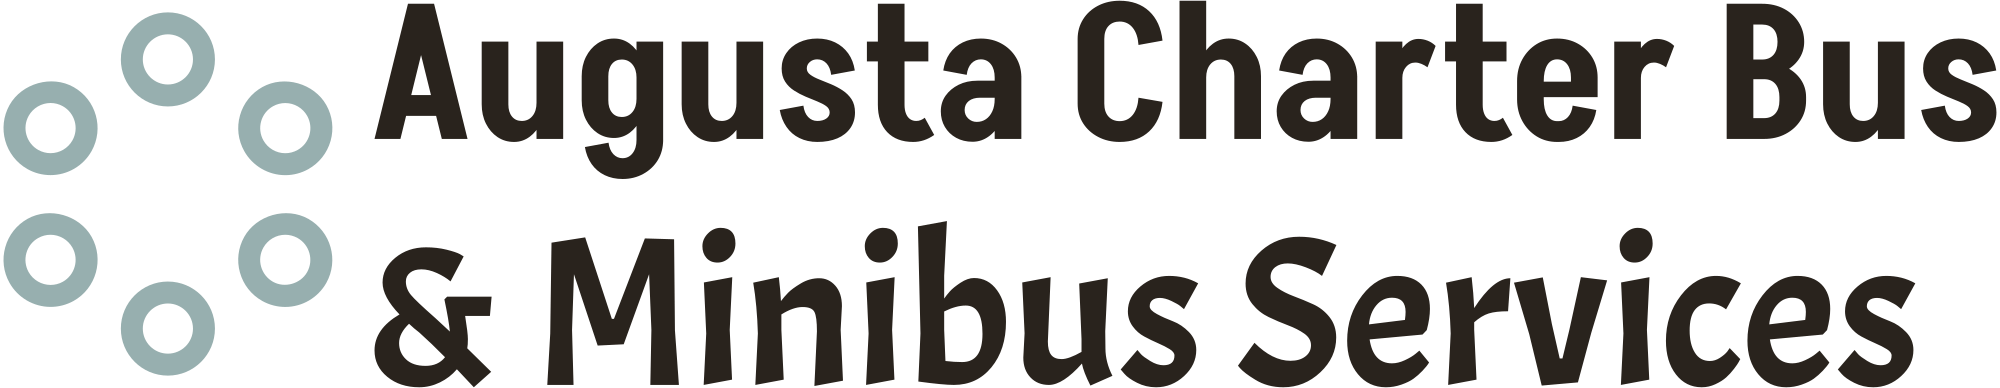 Charter Bus Company Augusta logo